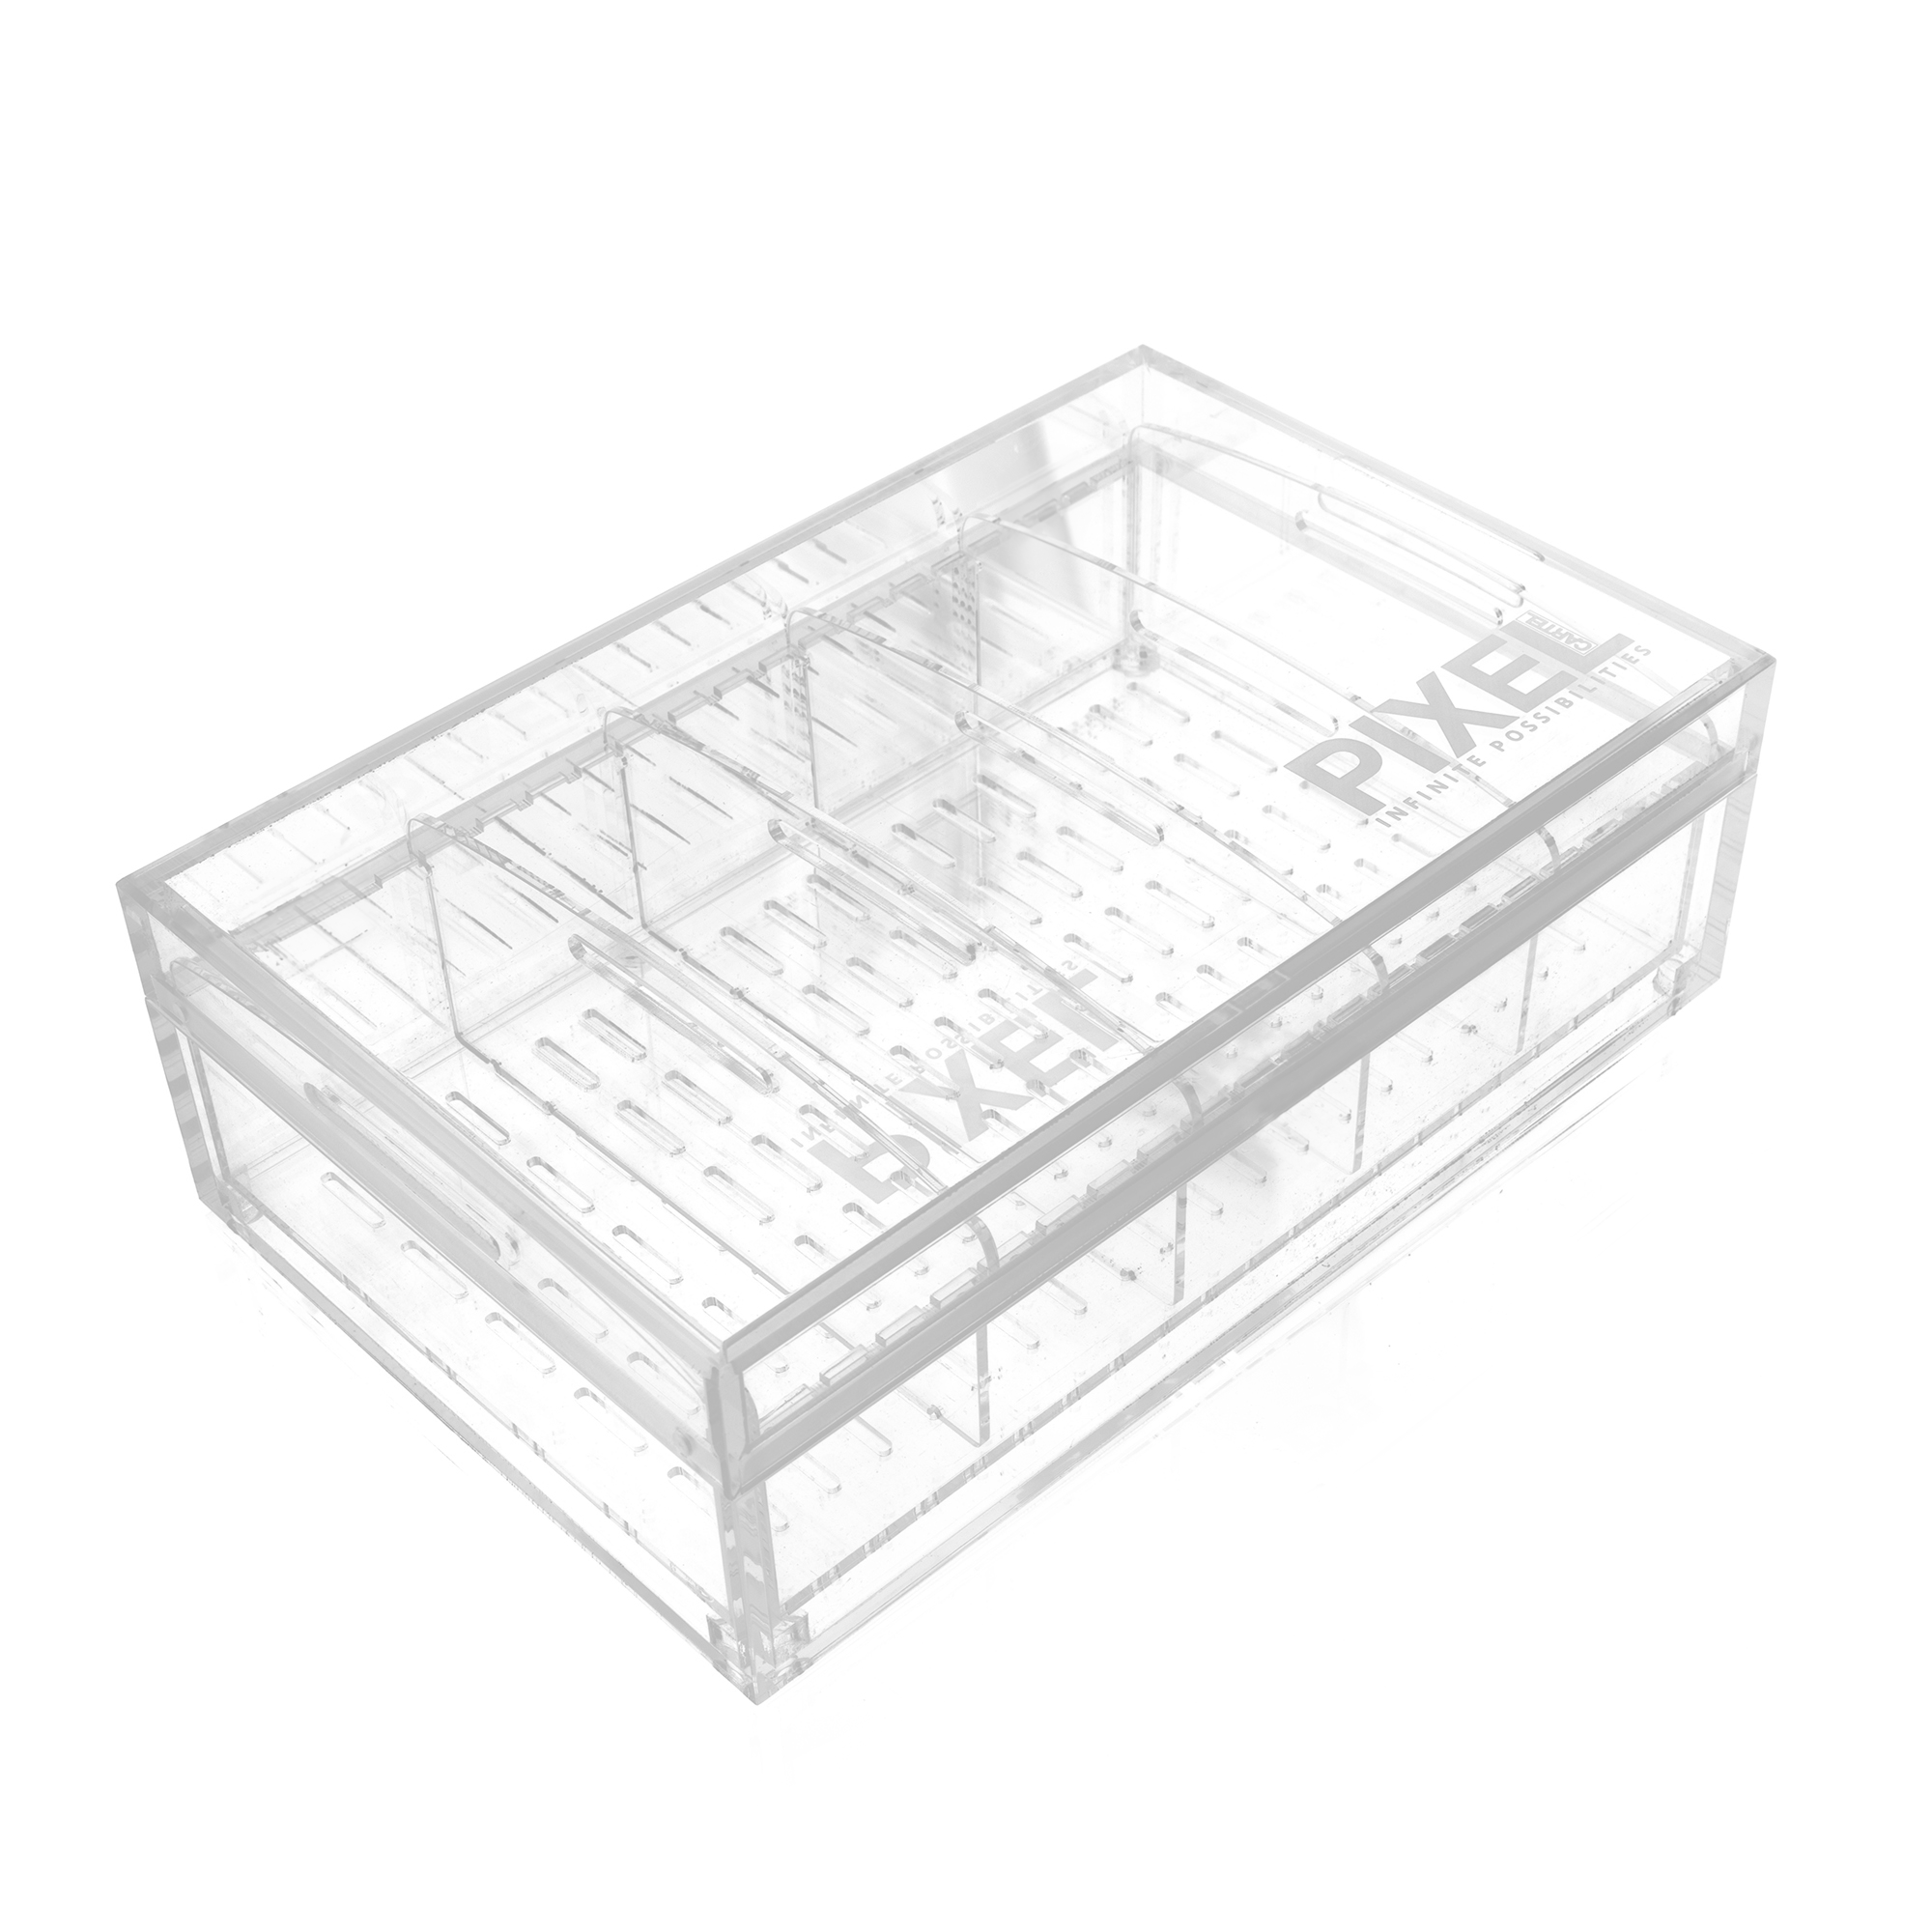 Pixel Cartel Acrylic Humidor Storage esd-official